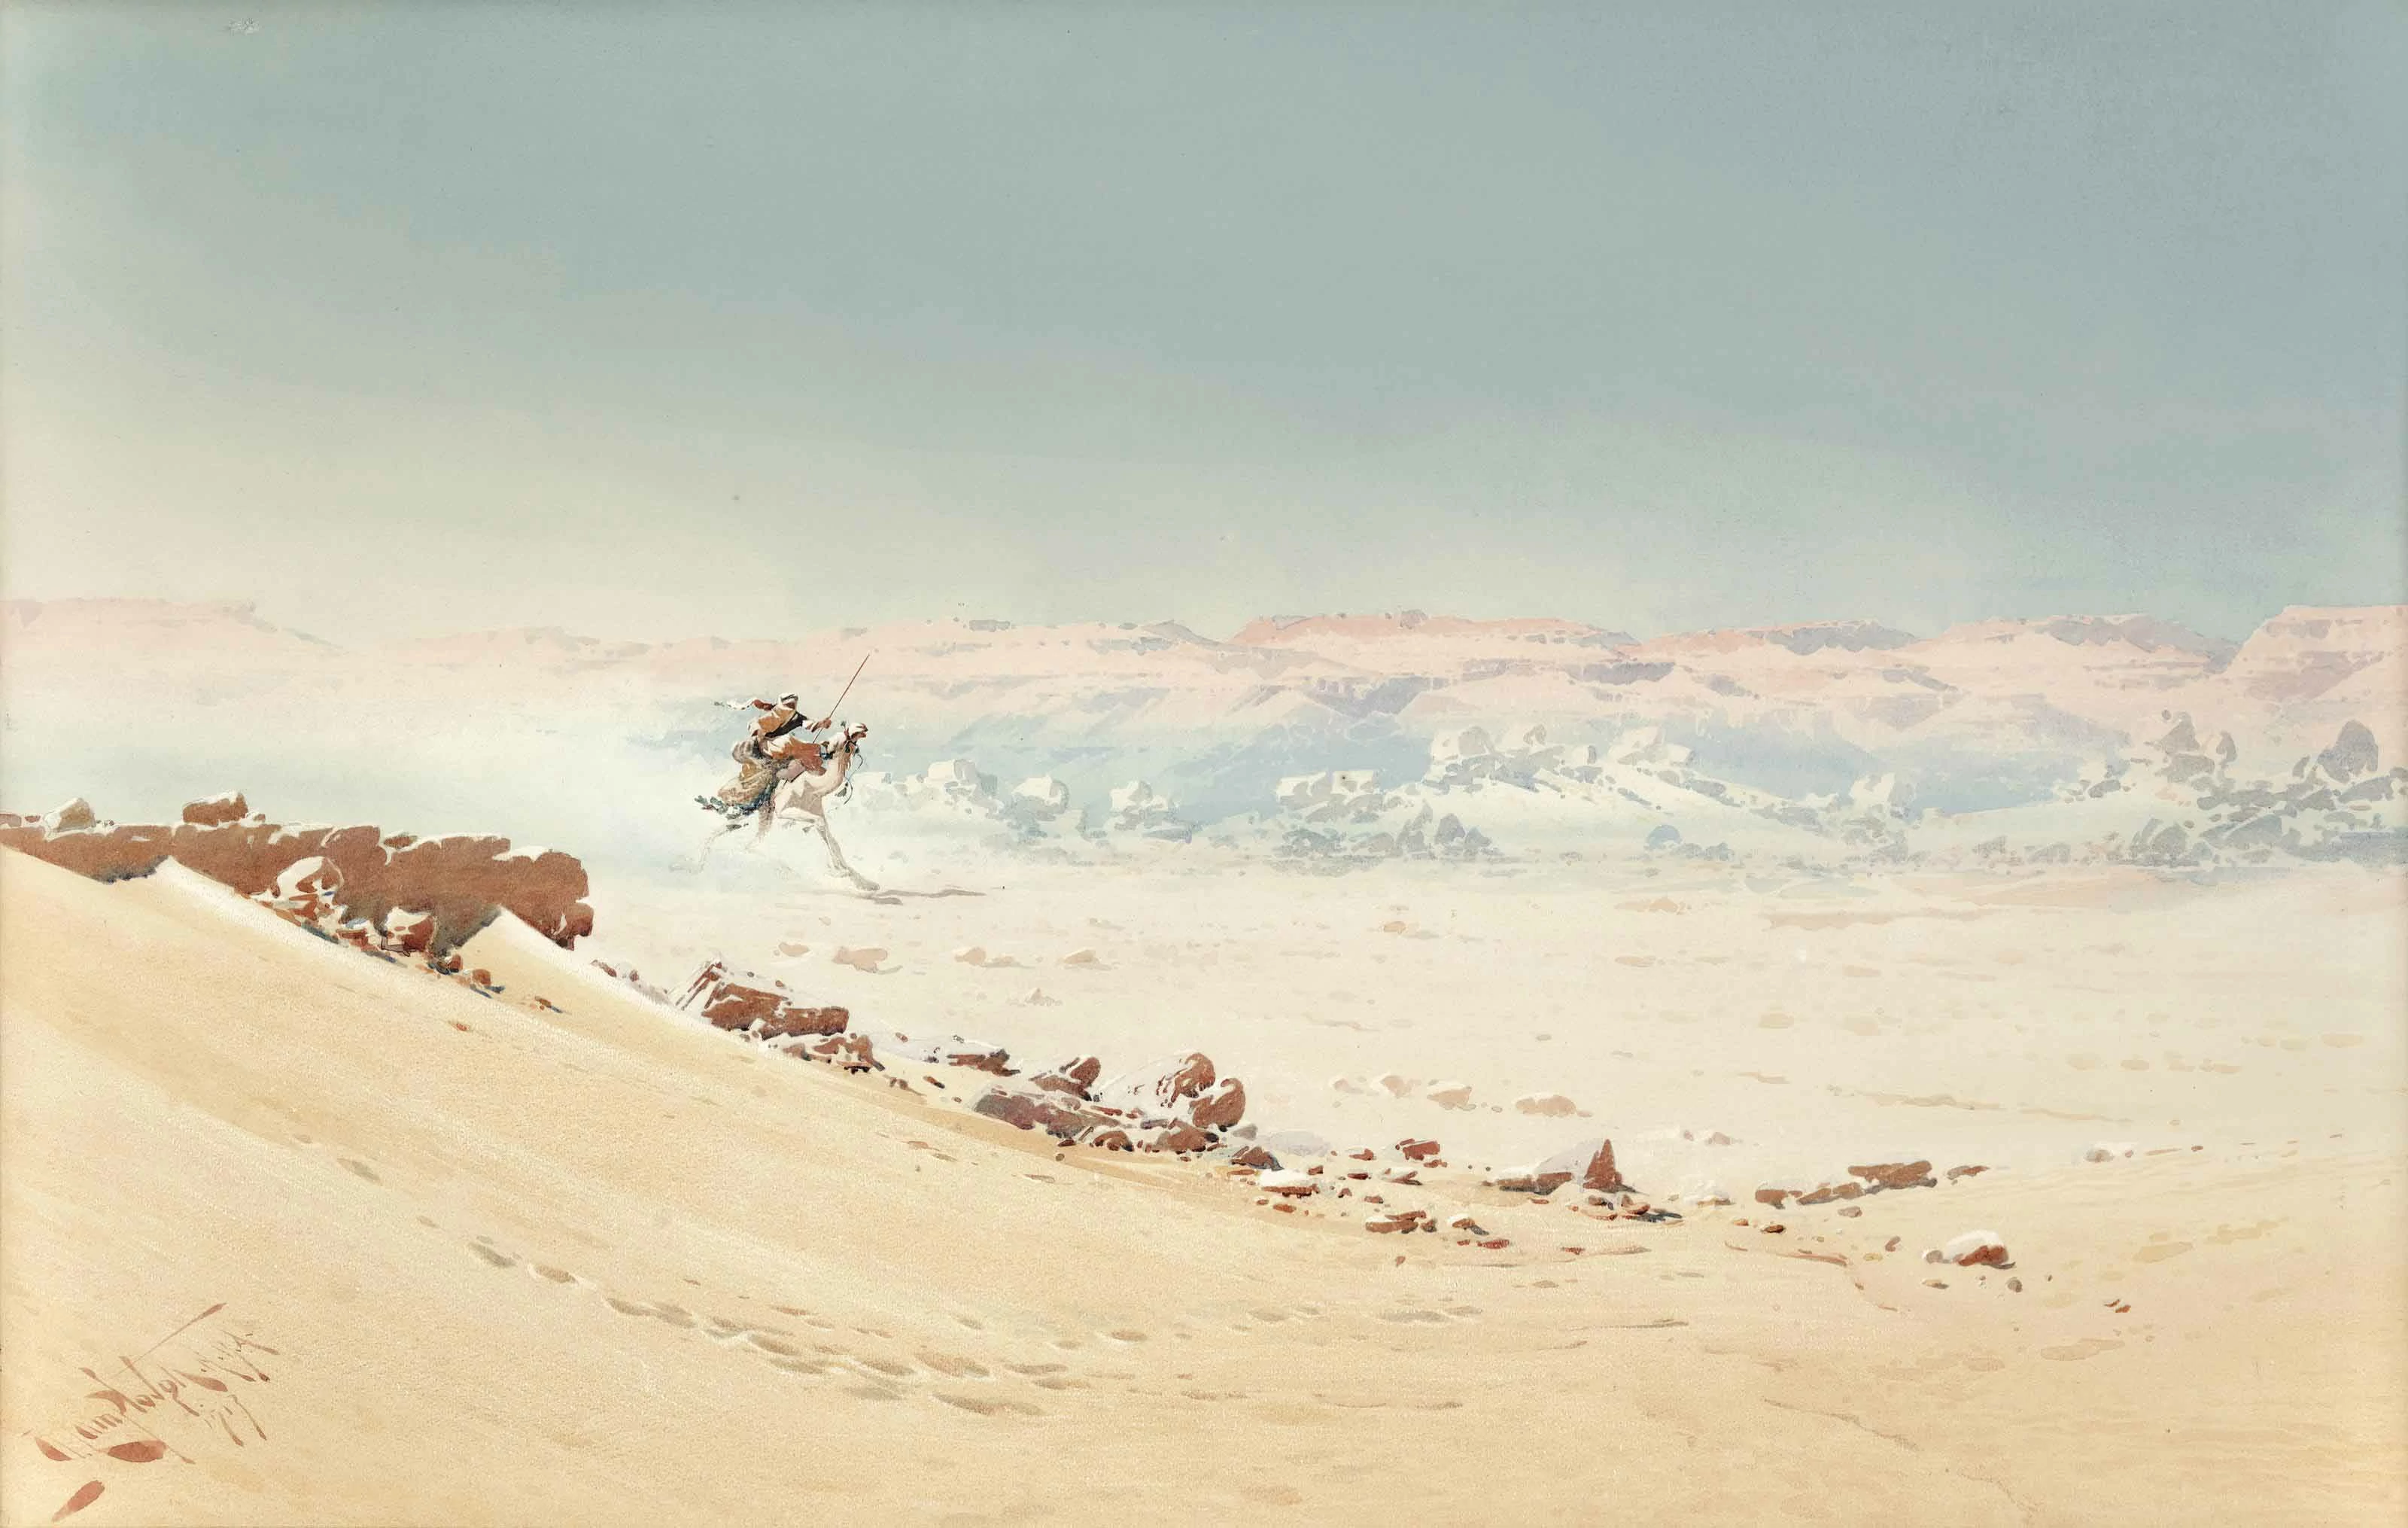 A rider in the desert, Augustus Osborne Lamplough